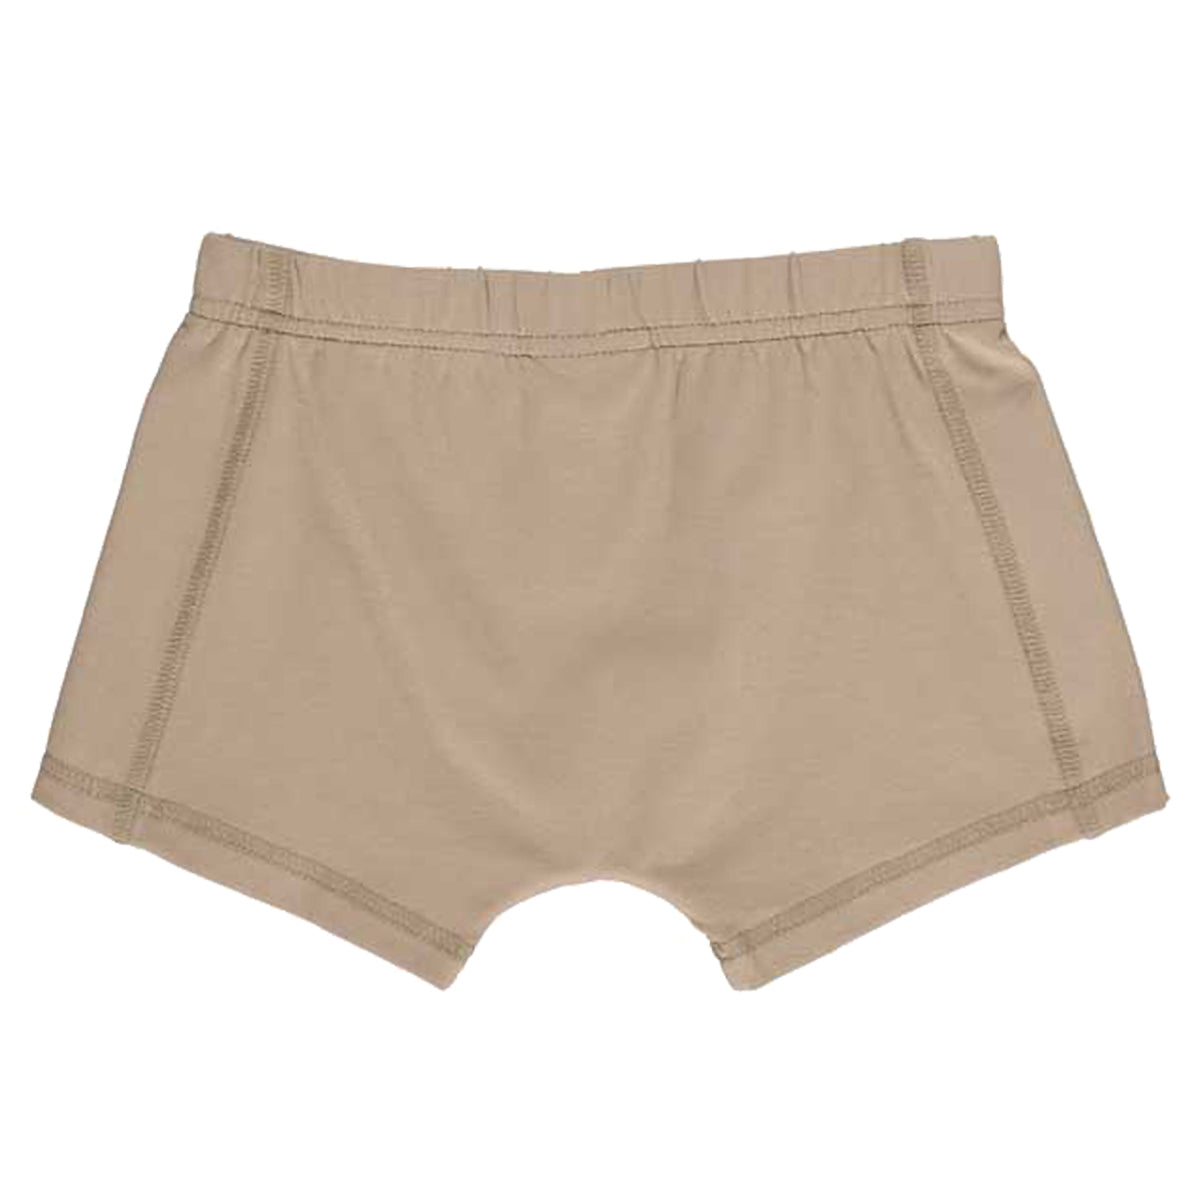 Müsli Underwear Set Boxer Seed - Jongens Ondergoed Set6